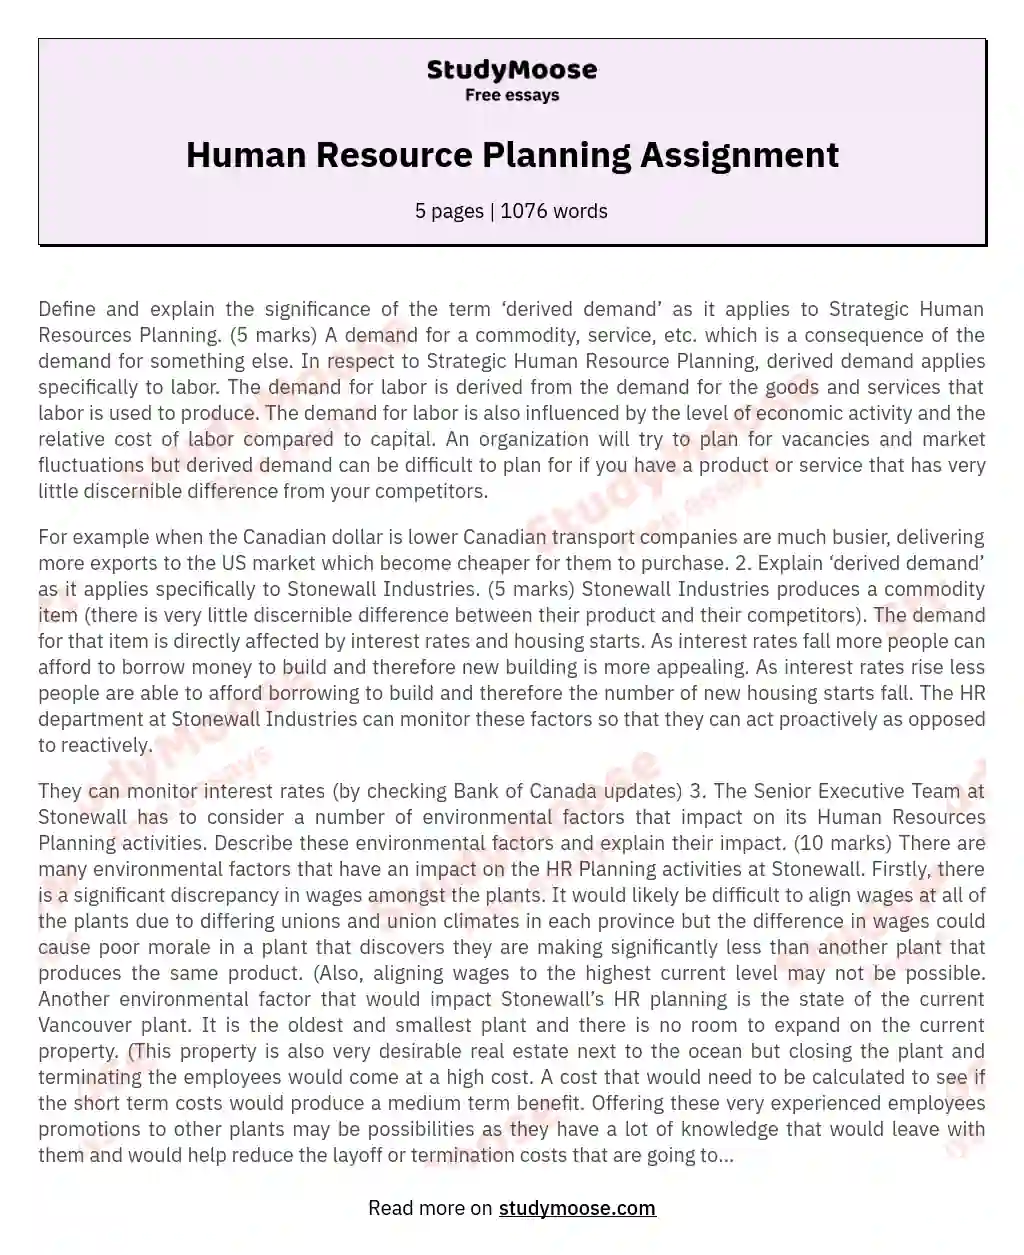 Human Resource Planning Assignment essay